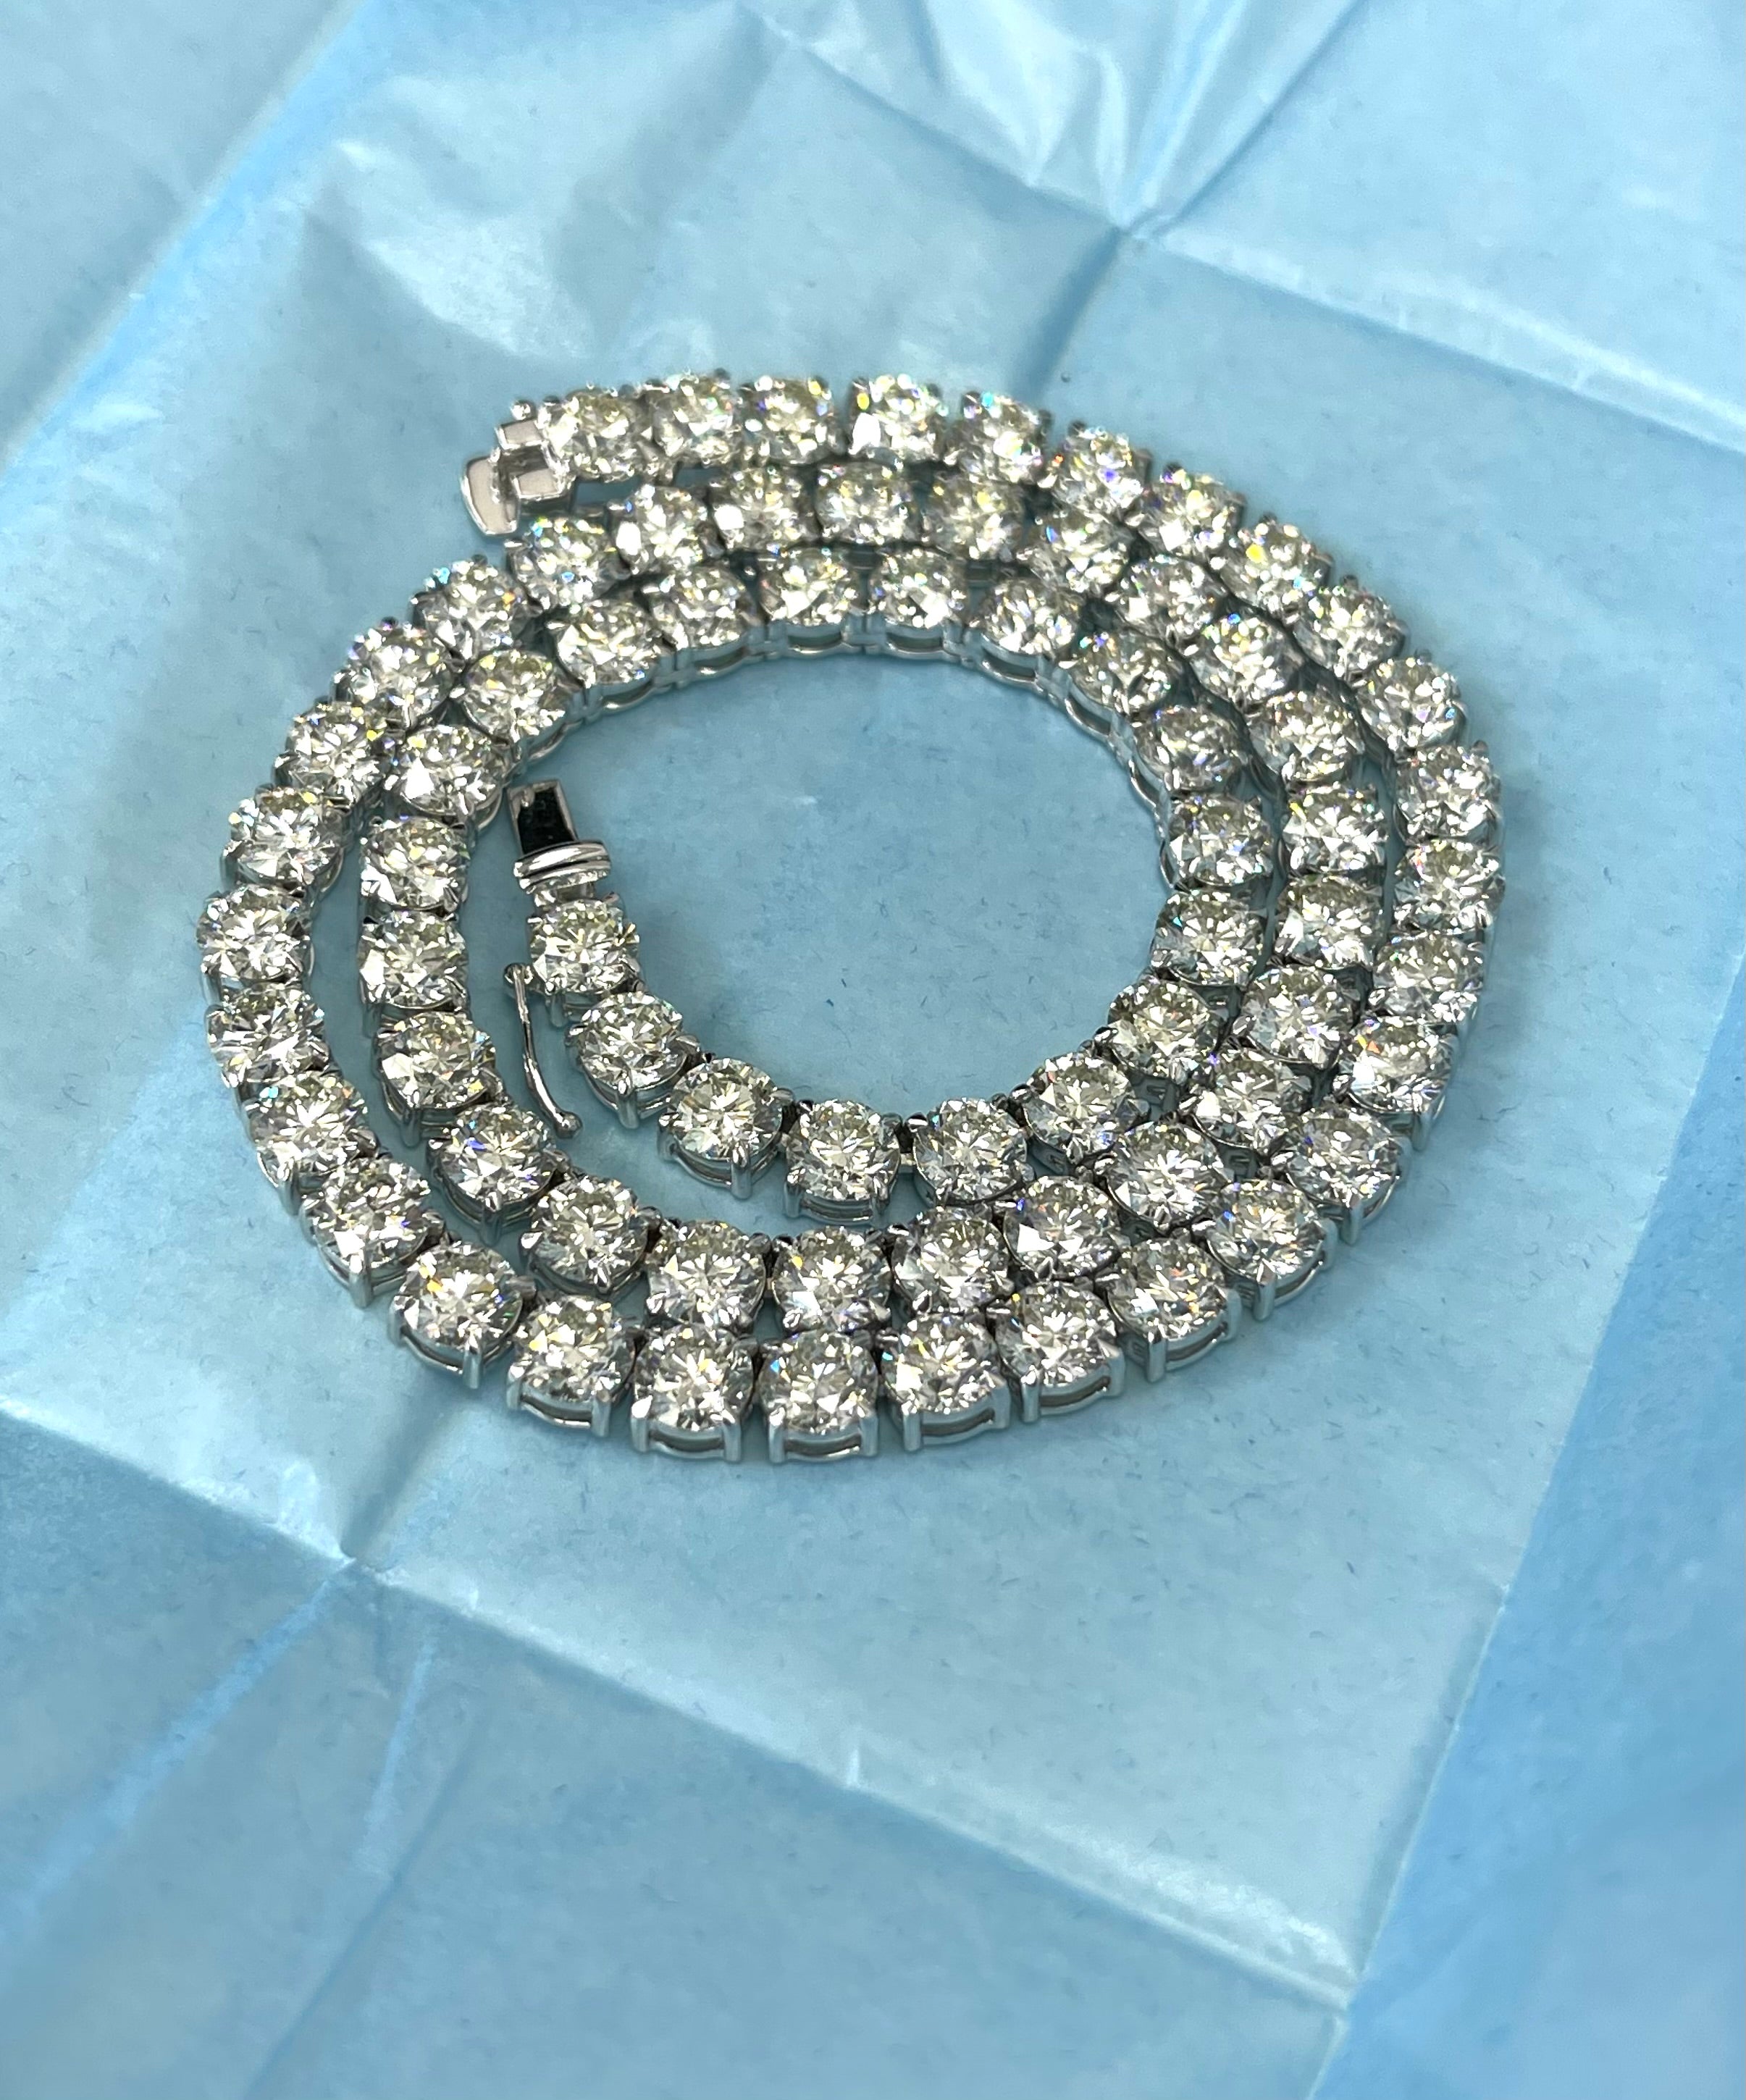 50.69 Carats Round Brilliants Diamond Tennis Necklace Chain 16.5 inches